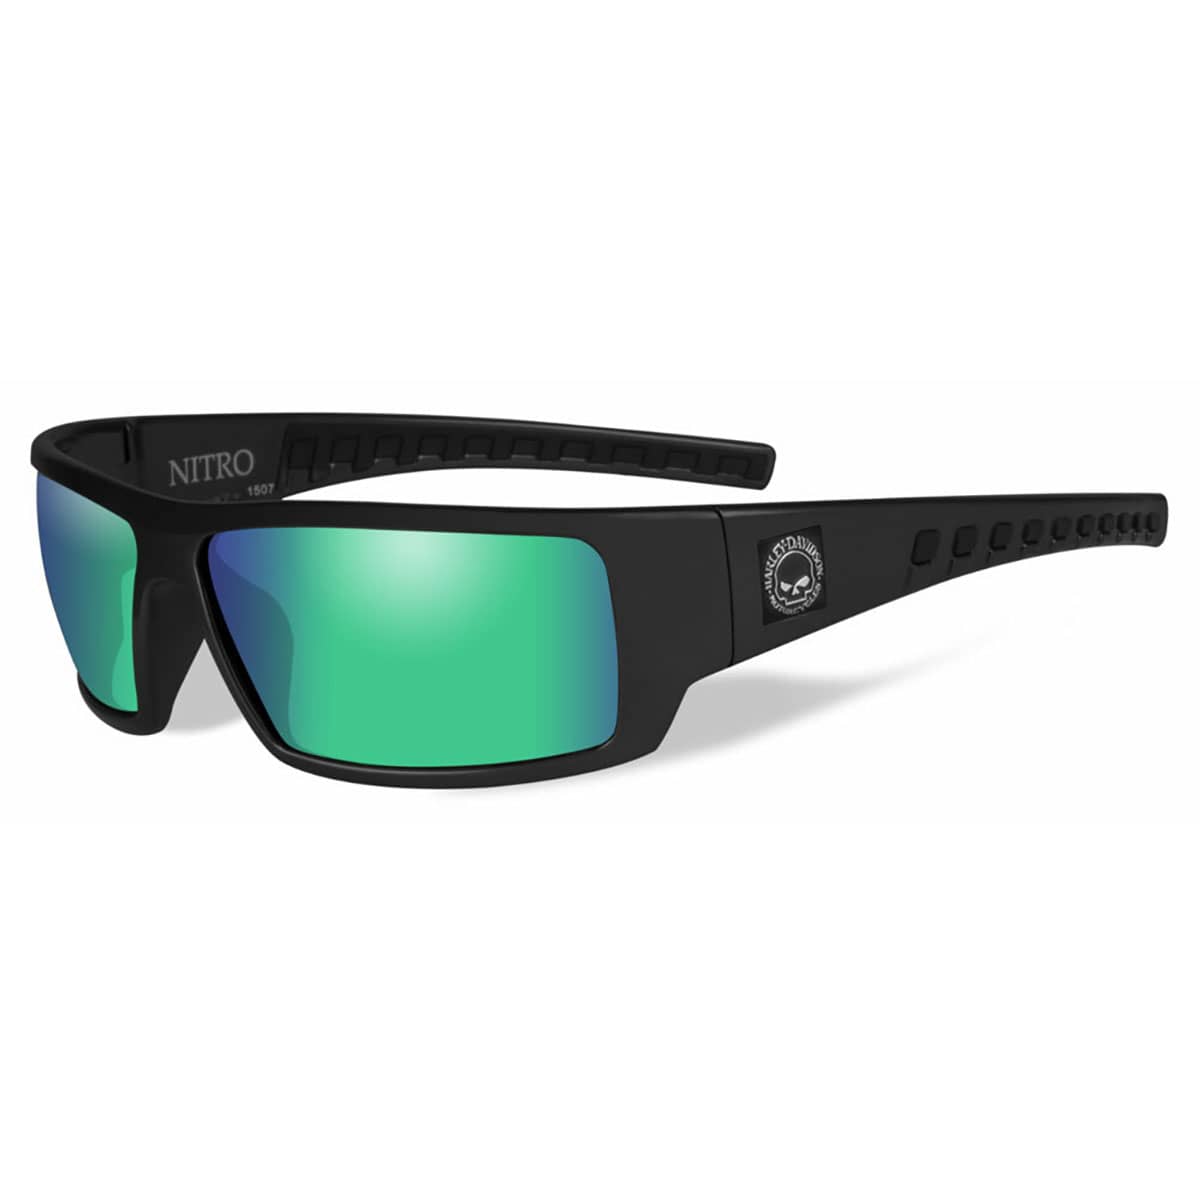 Harley-Davidson® Wiley X® Men's Nitro Sunglasses